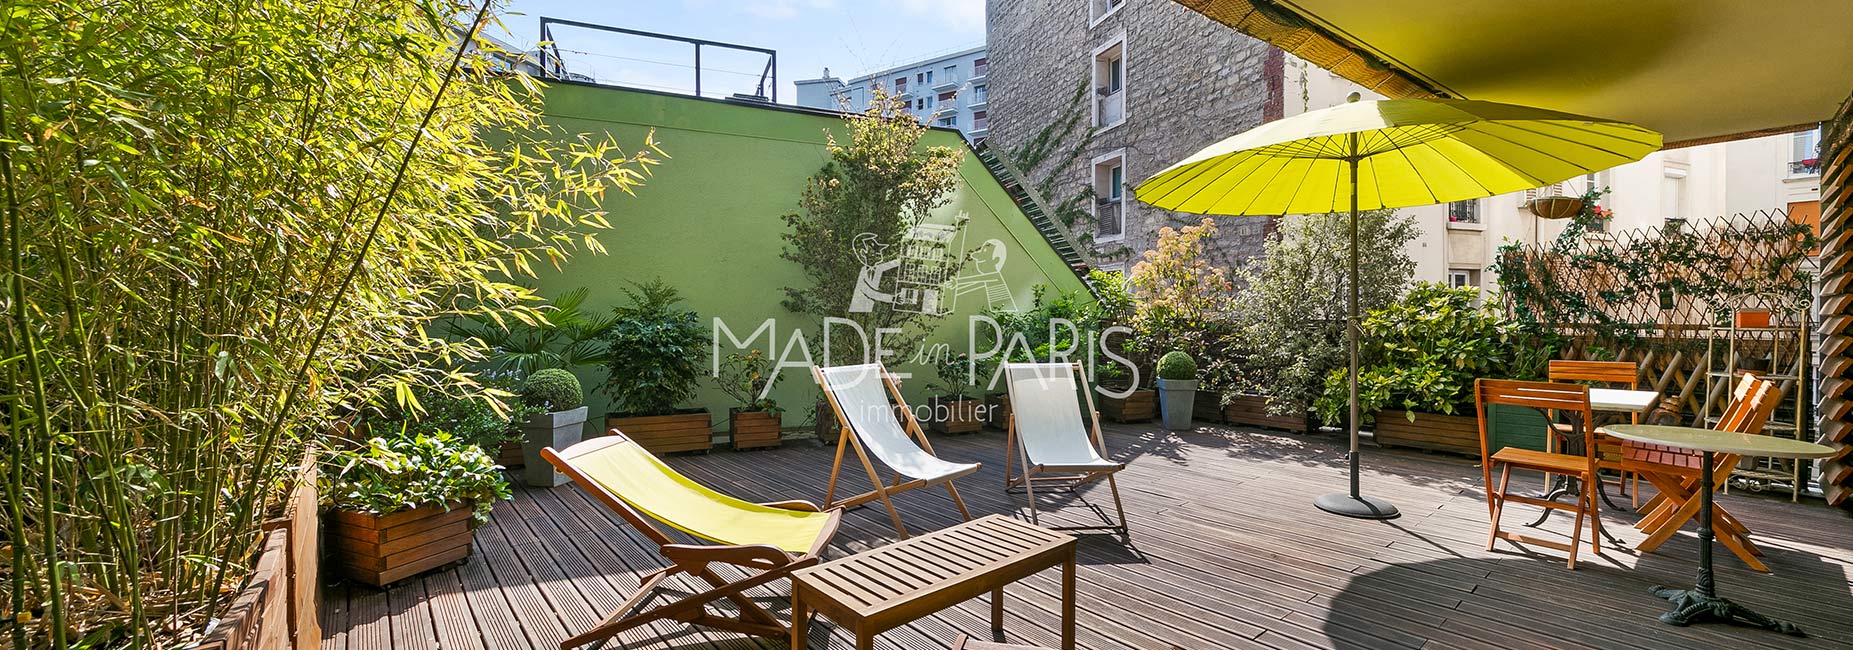 Made-in-Paris-immobilier-slider-acheter-appartement-paris